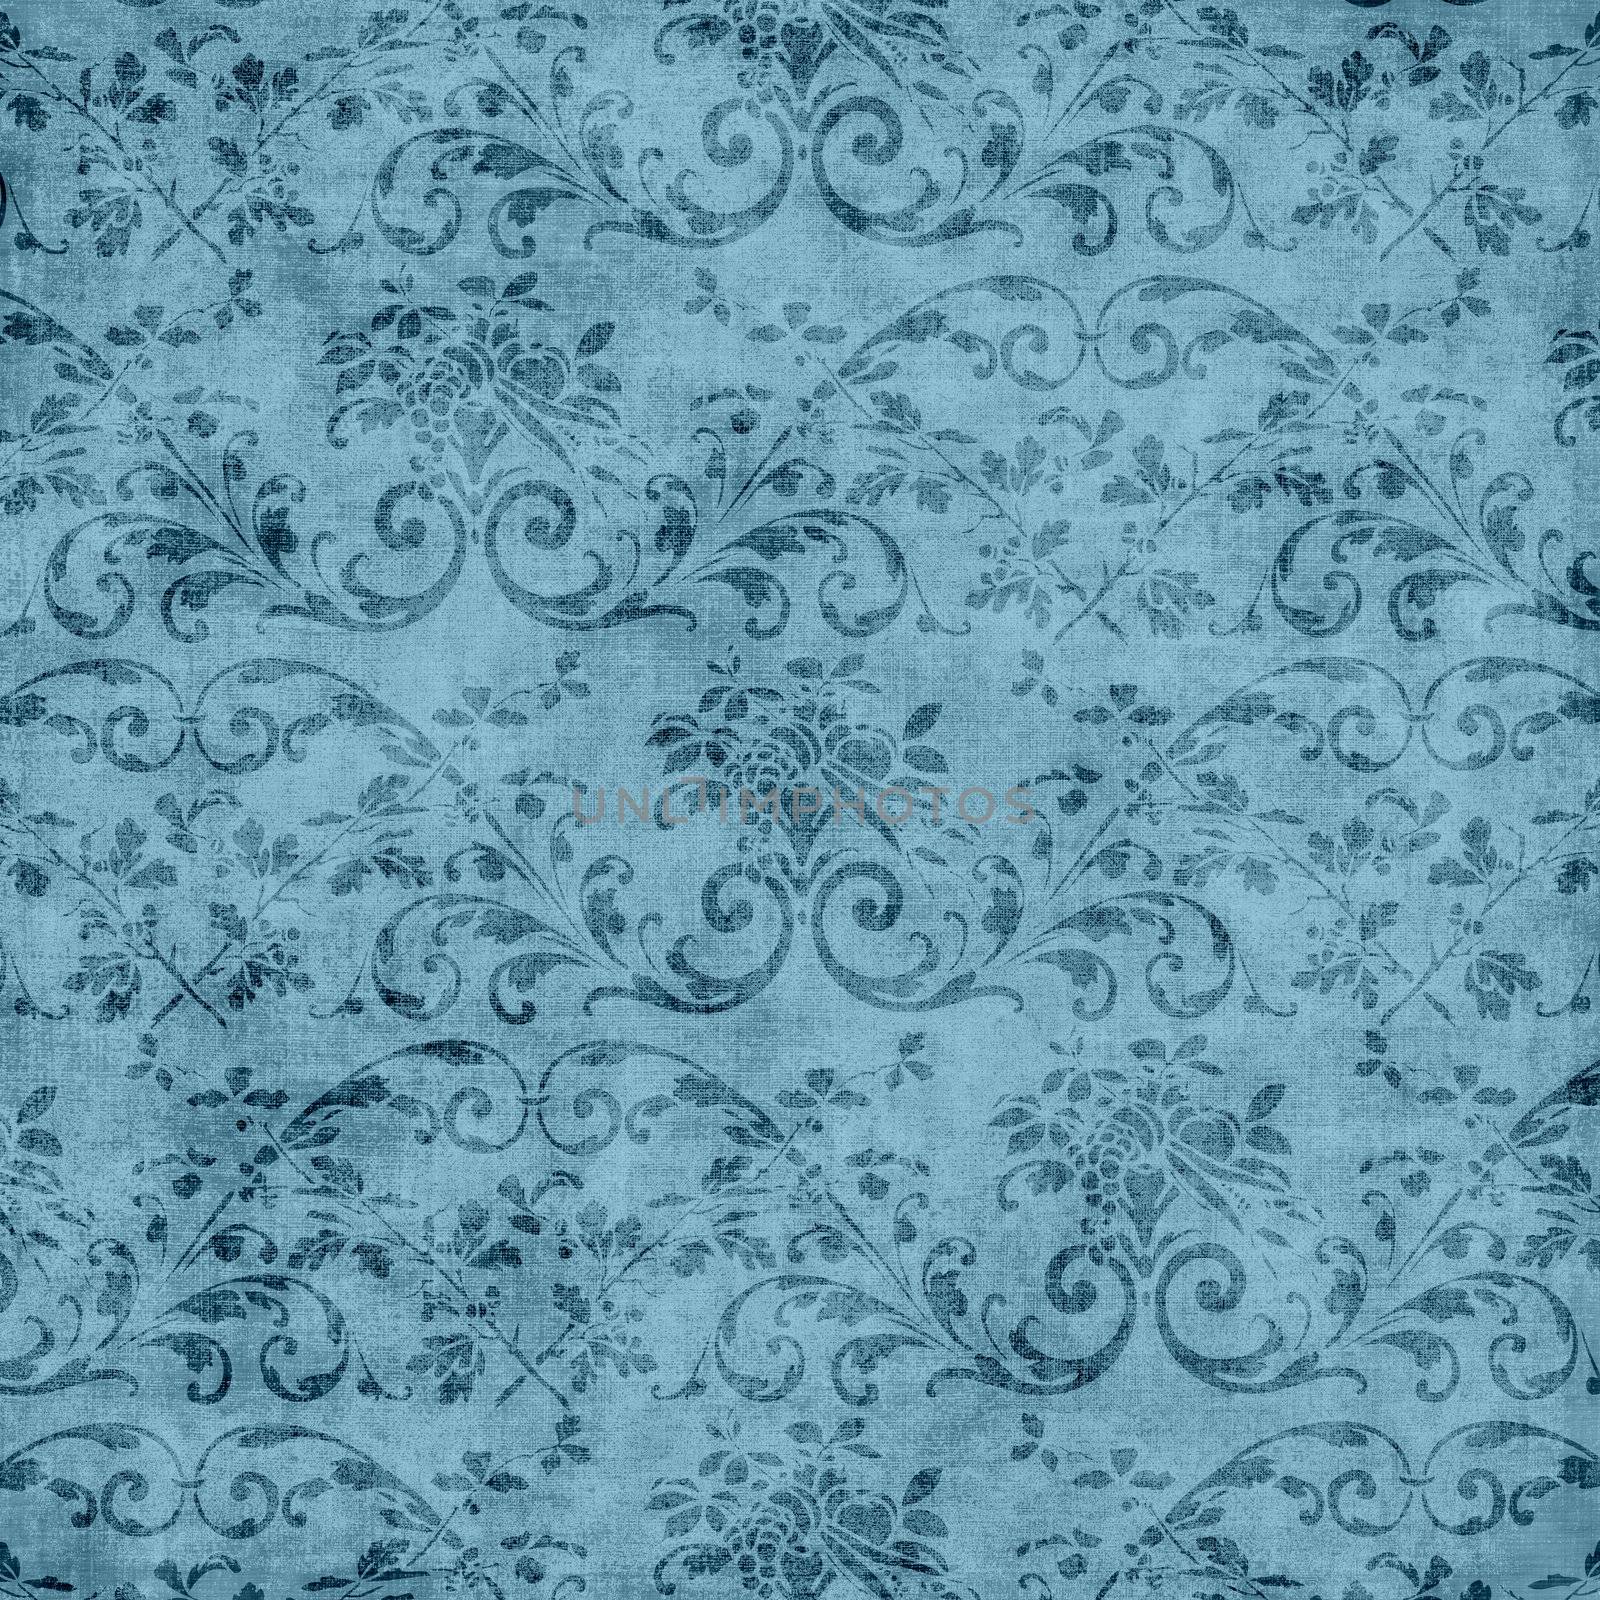 Vintage Blue Floral Tapestry Pattern by SongPixels